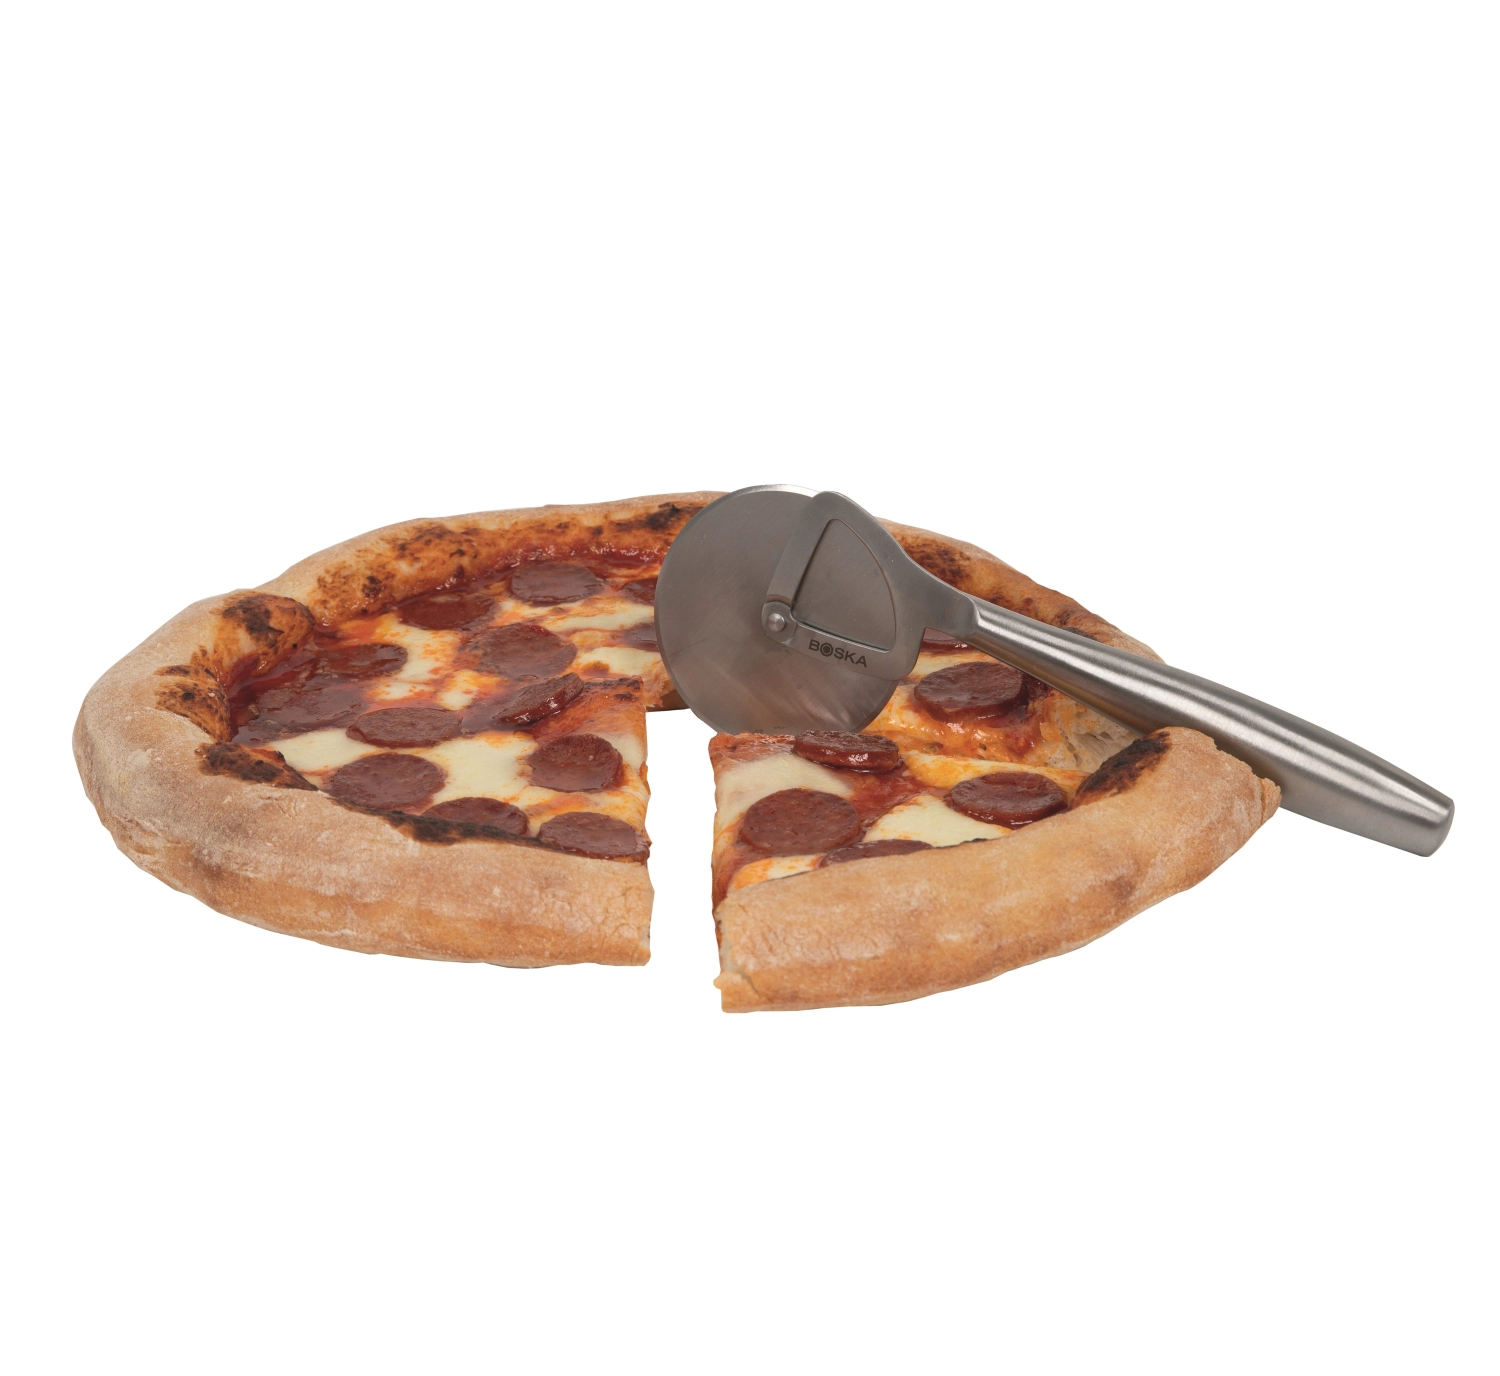 Coupe-pizza copenhagen